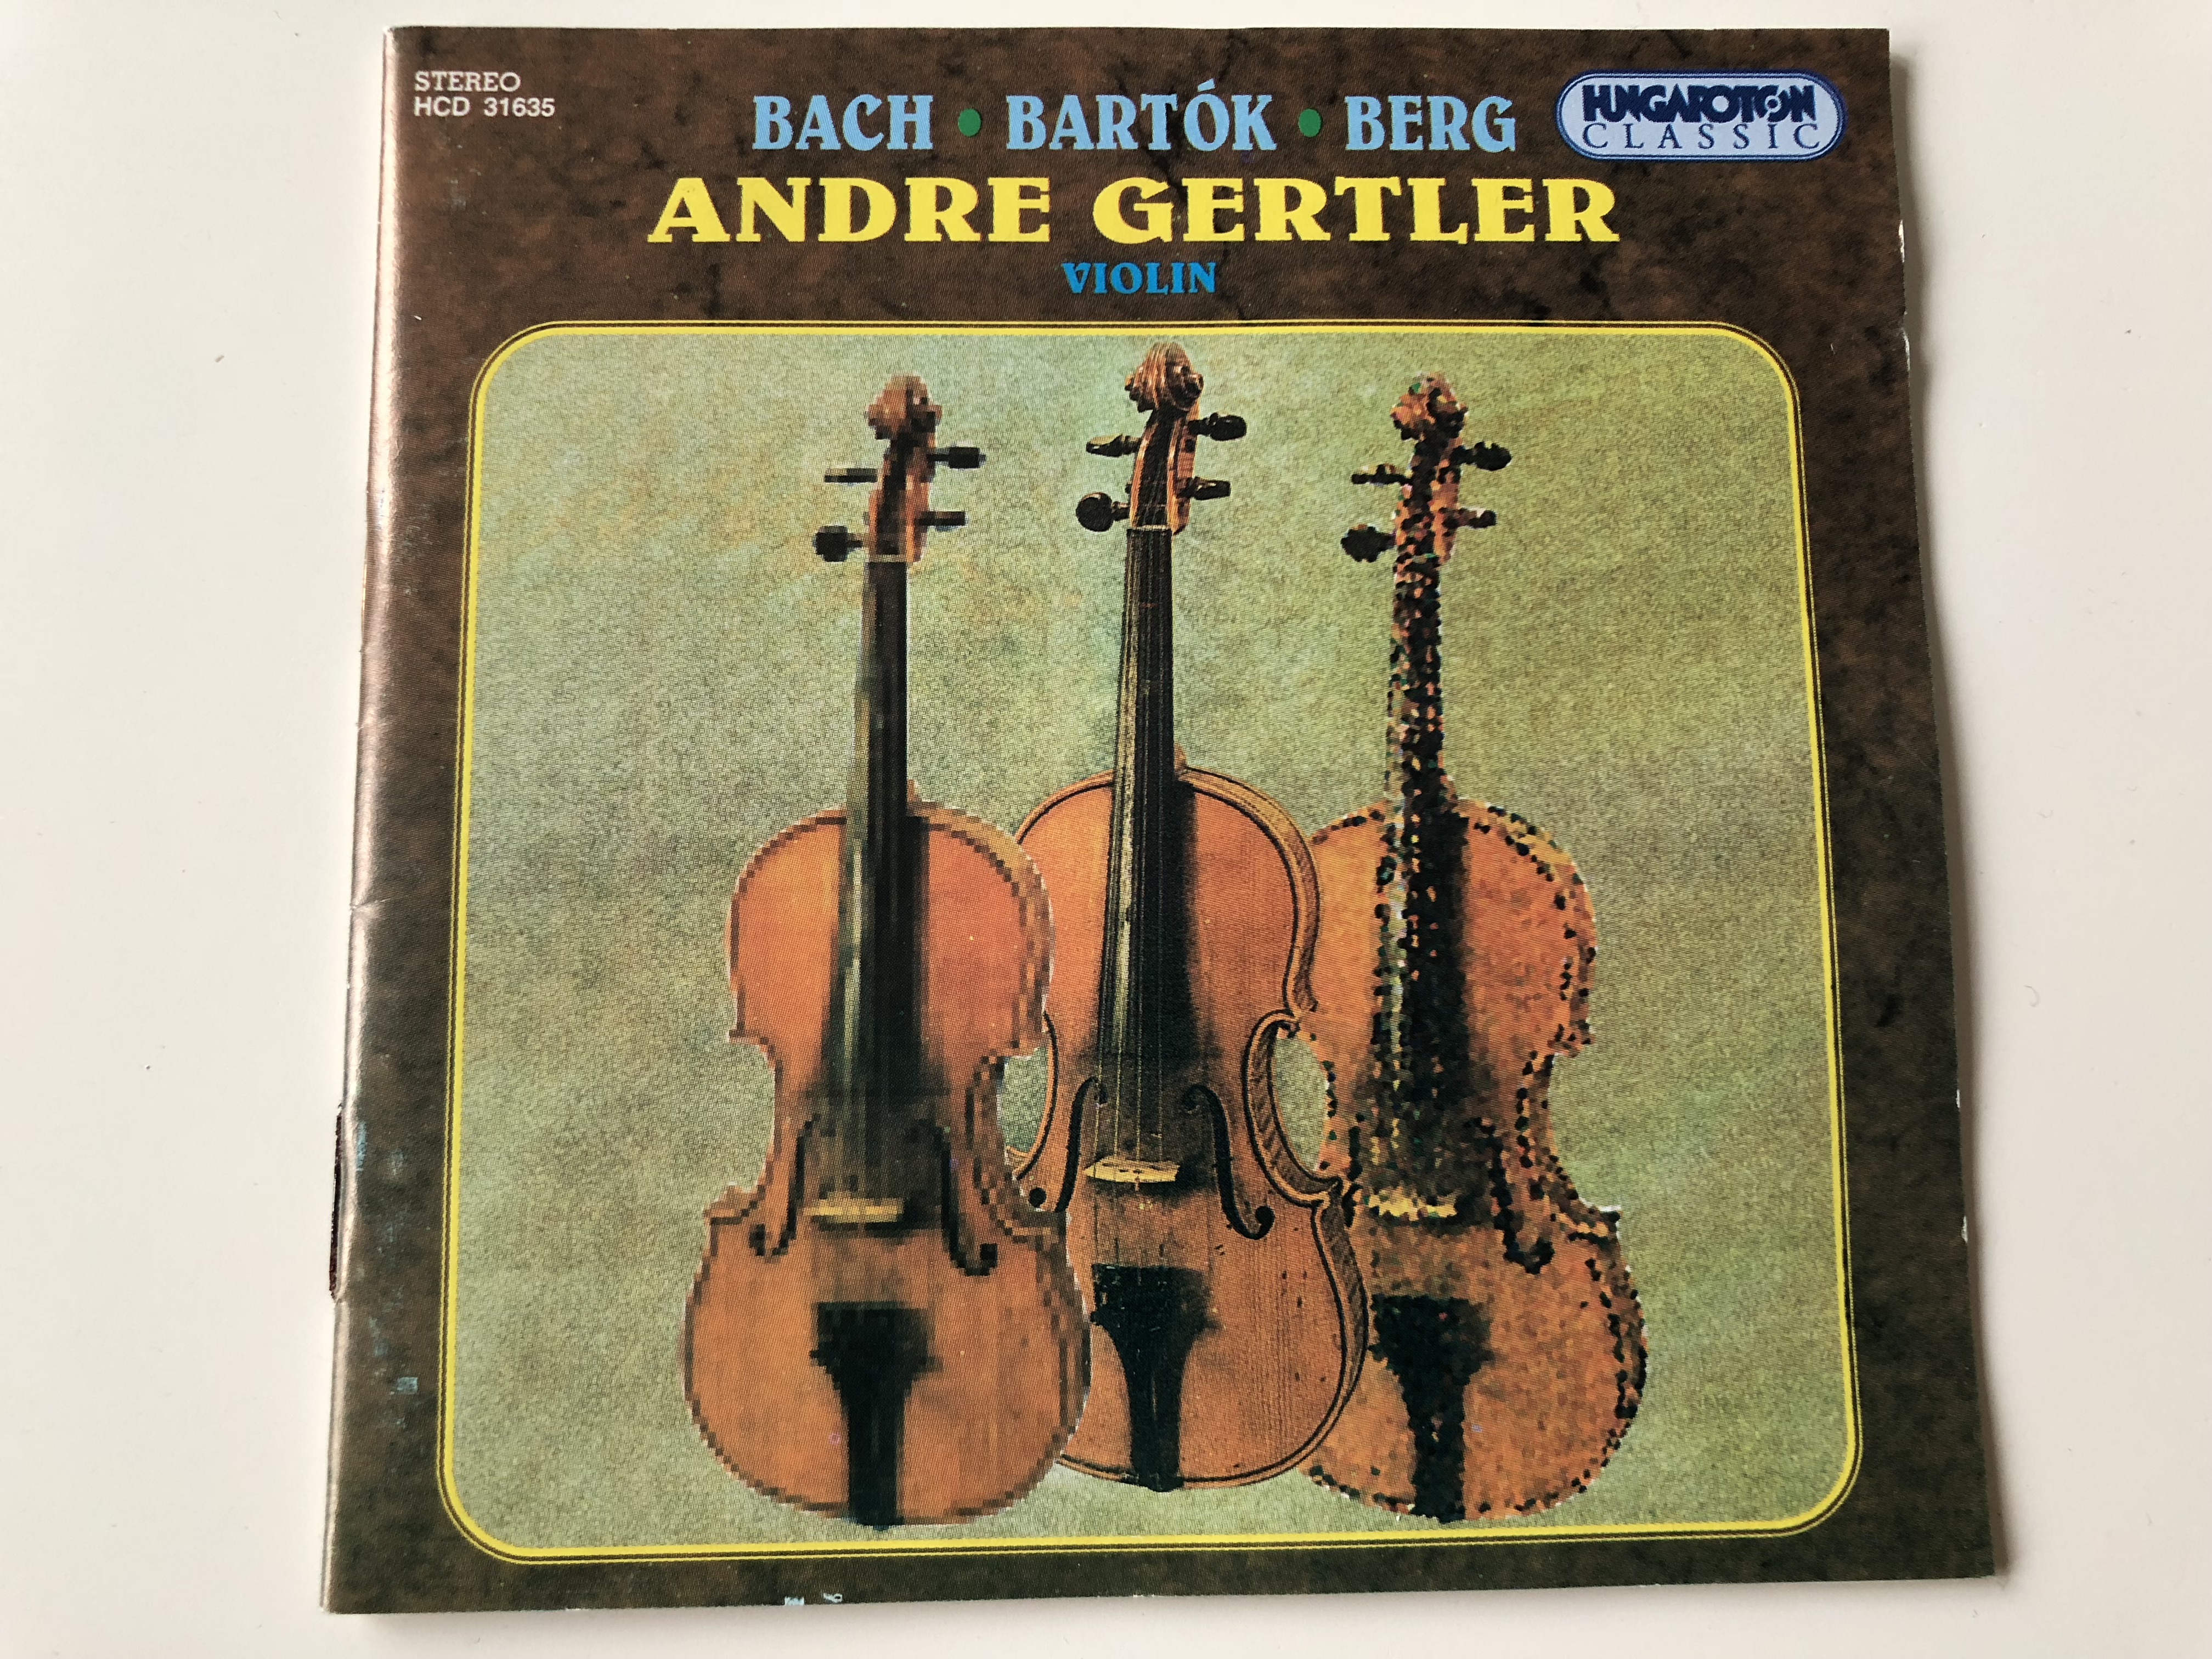 bach-bart-k-berg-andre-gertler-violin-hungaroton-audio-cd-1996-hcd-31635-1-.jpg